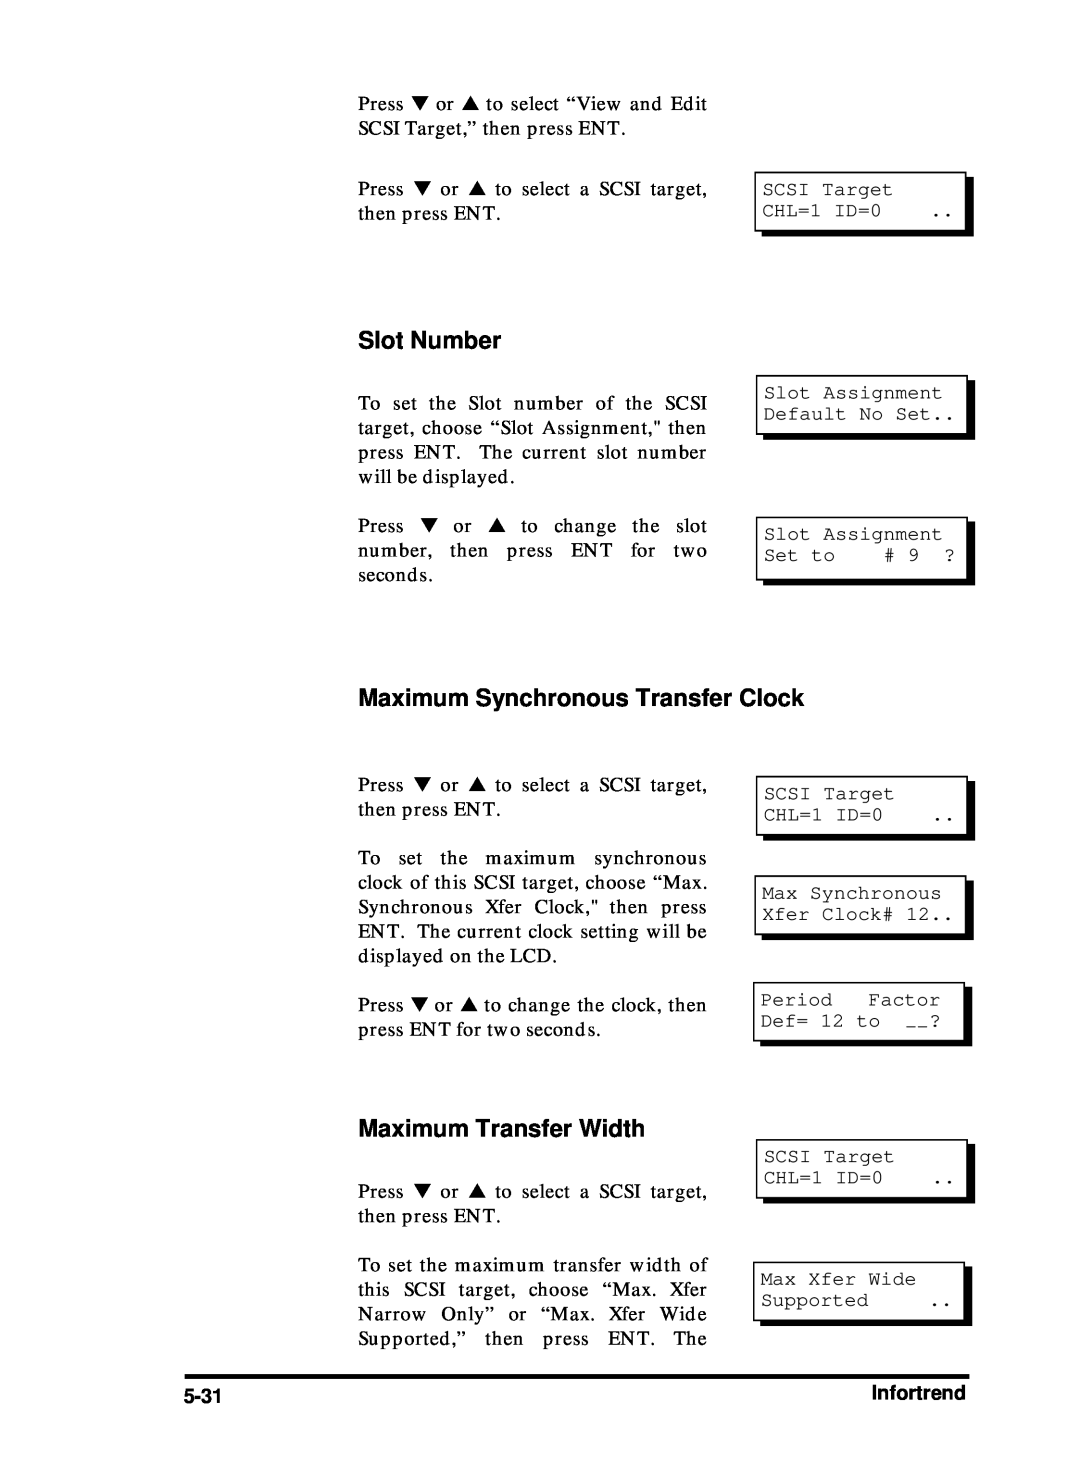 Compaq Infortrend manual Slot Number, Maximum Synchronous Transfer Clock, Maximum Transfer Width, 5-31 